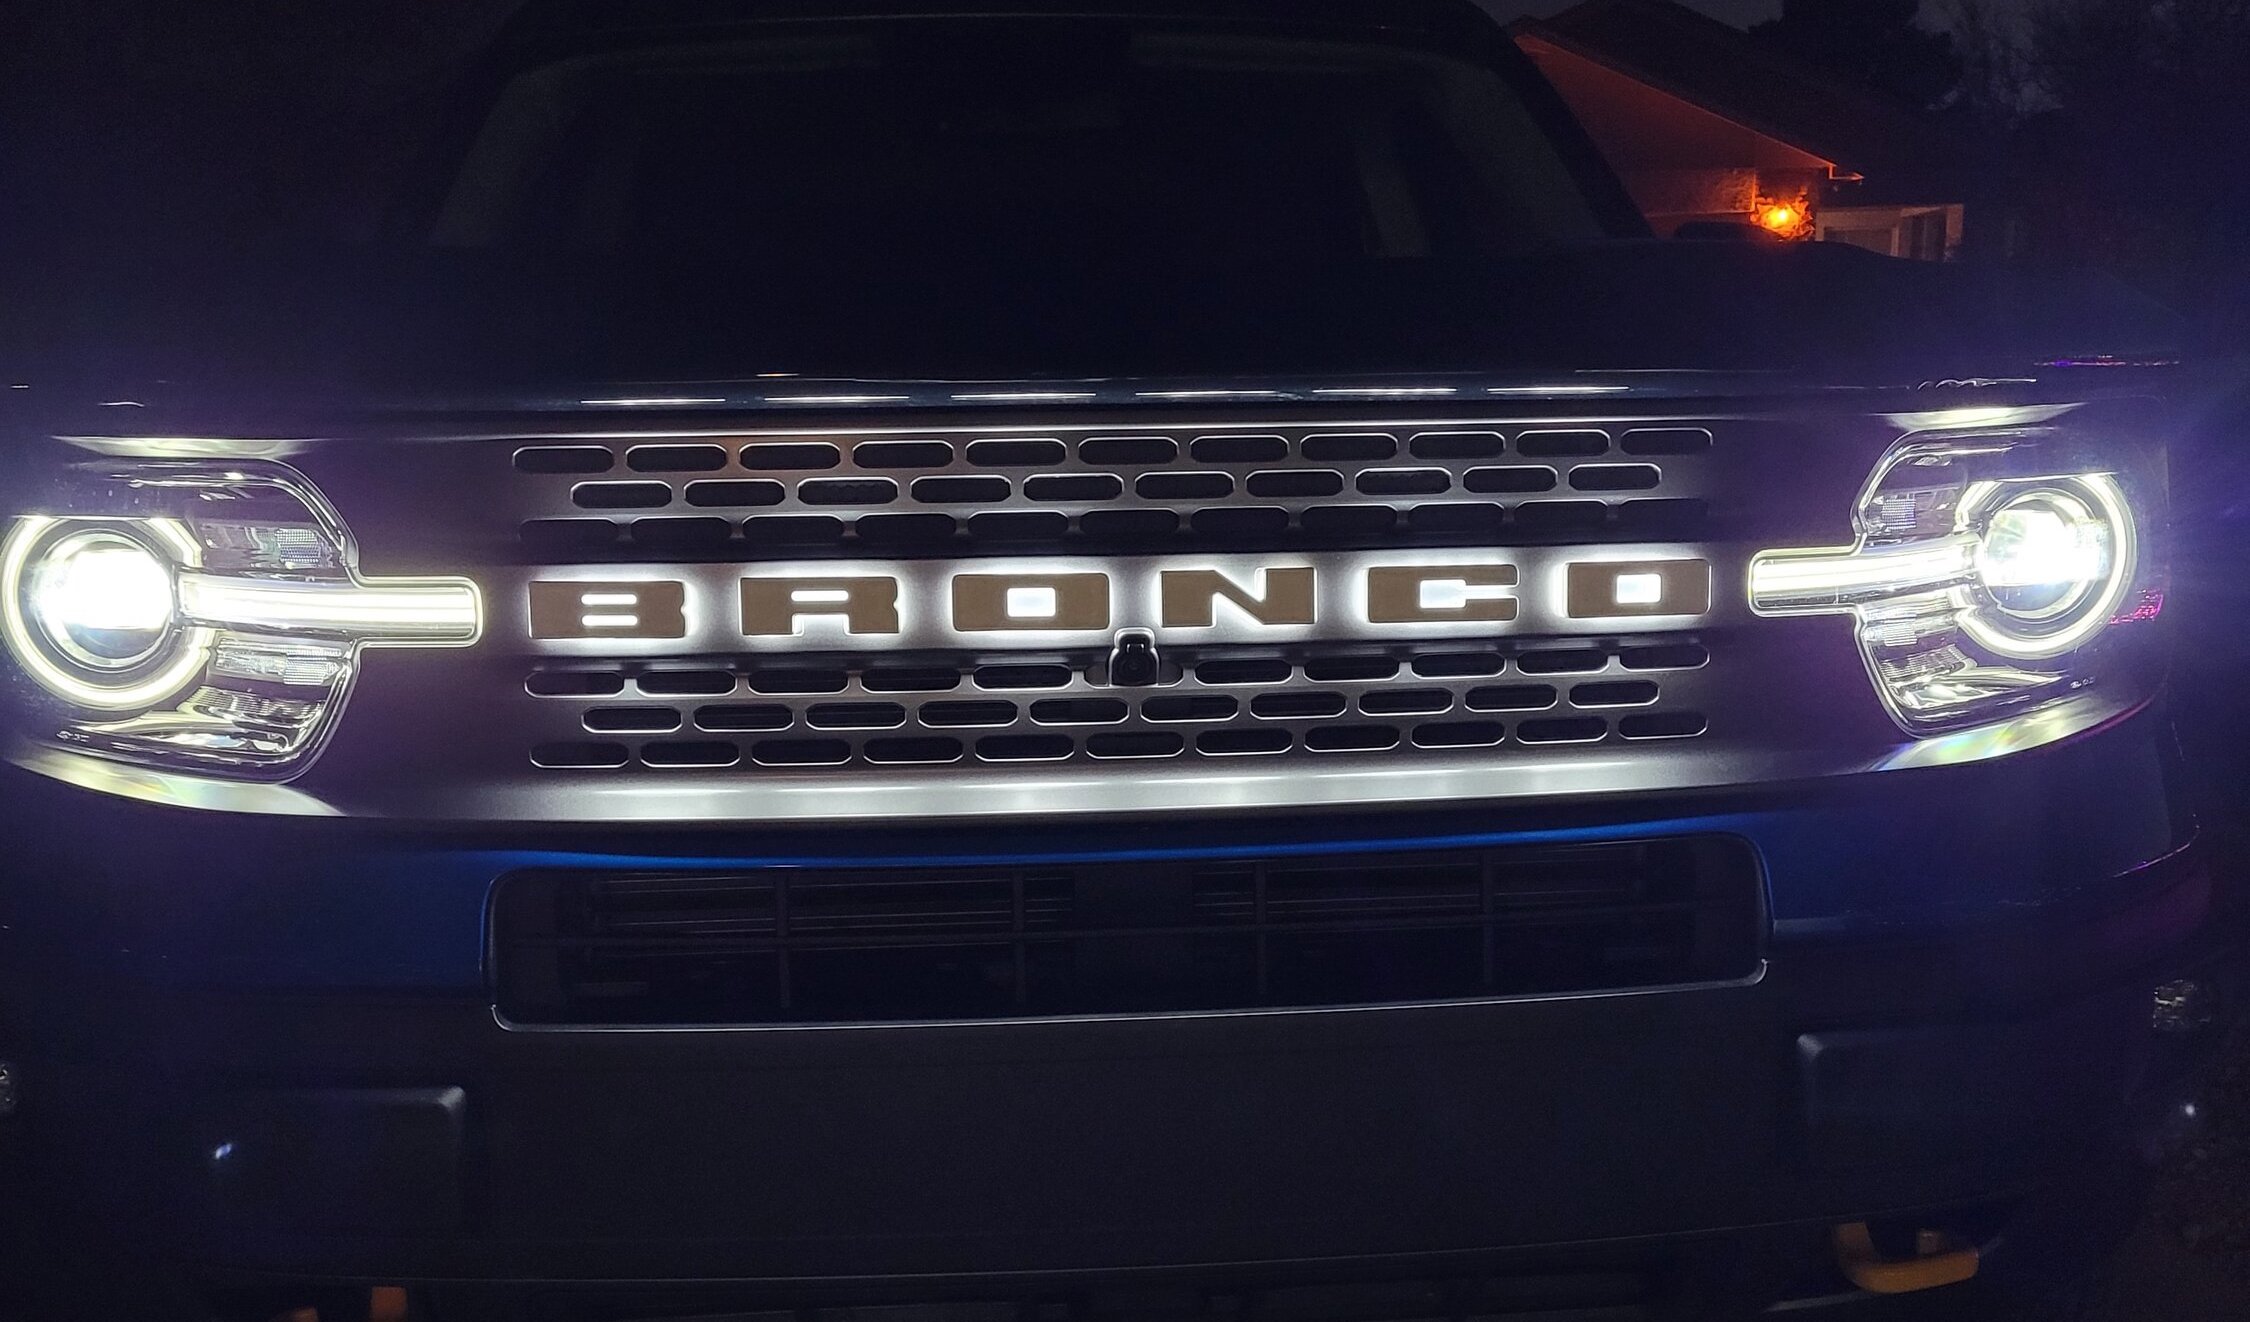 Oracle LED Grille Bronco Lettering Installed on Bronco Sport